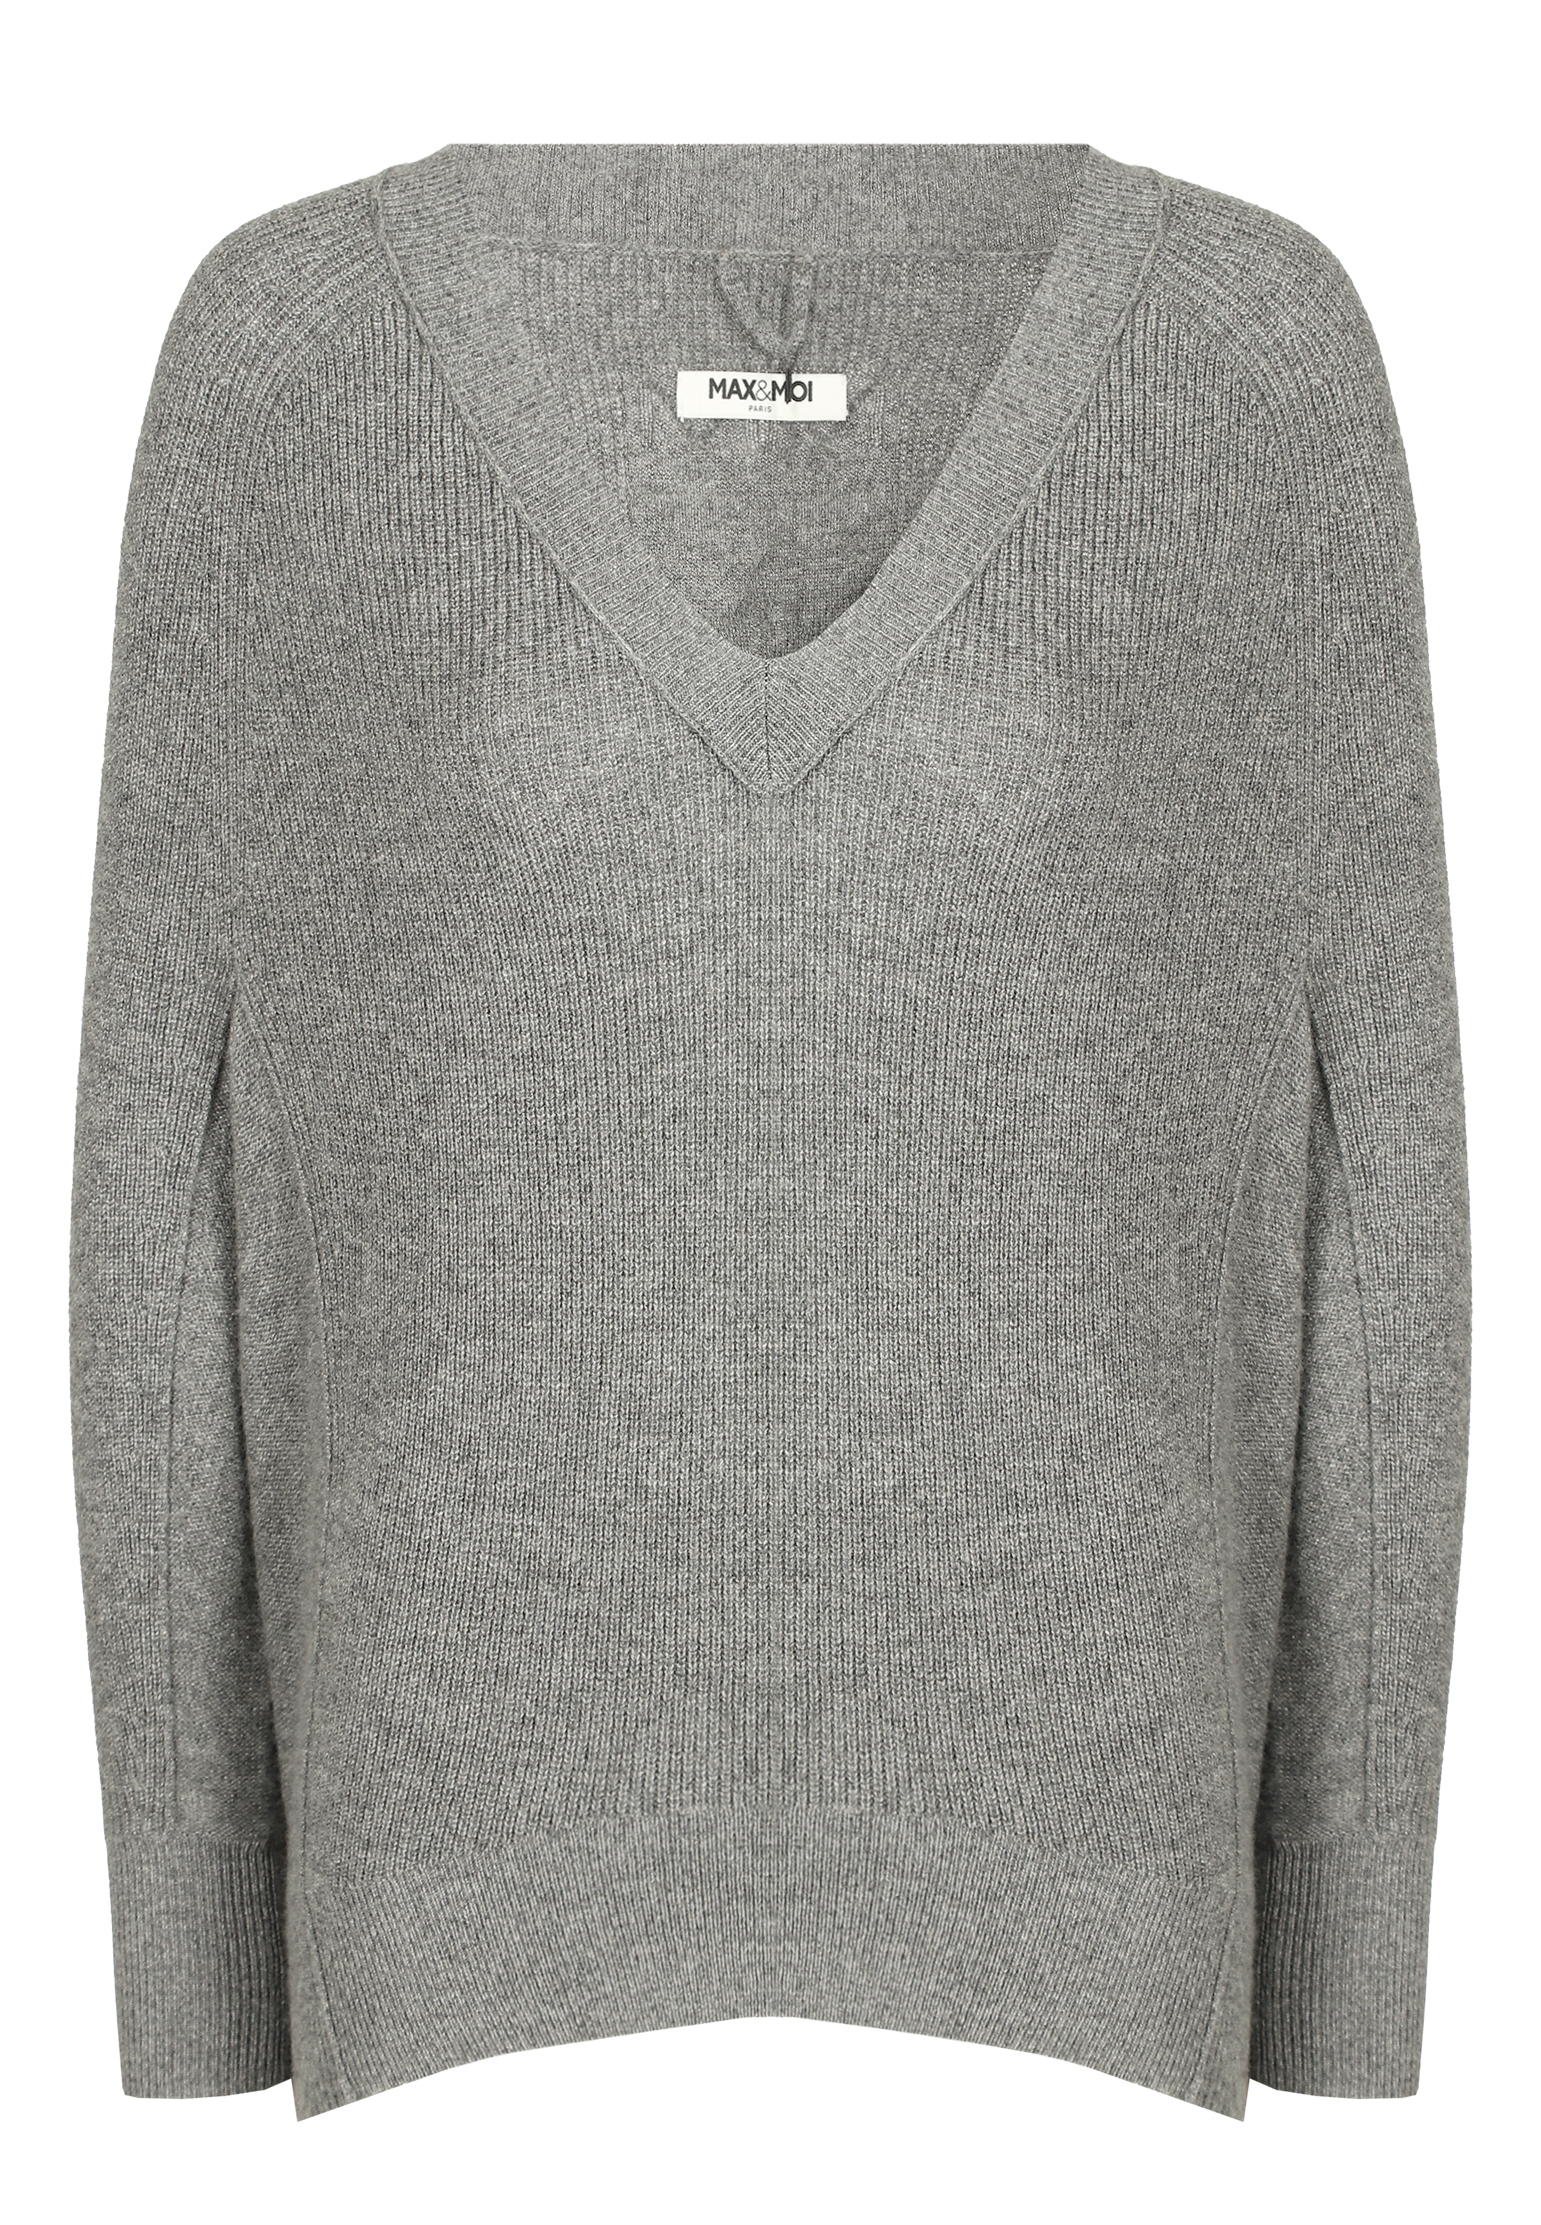 Пуловер MAX&MOI Серый, размер S 147140 - фото 1